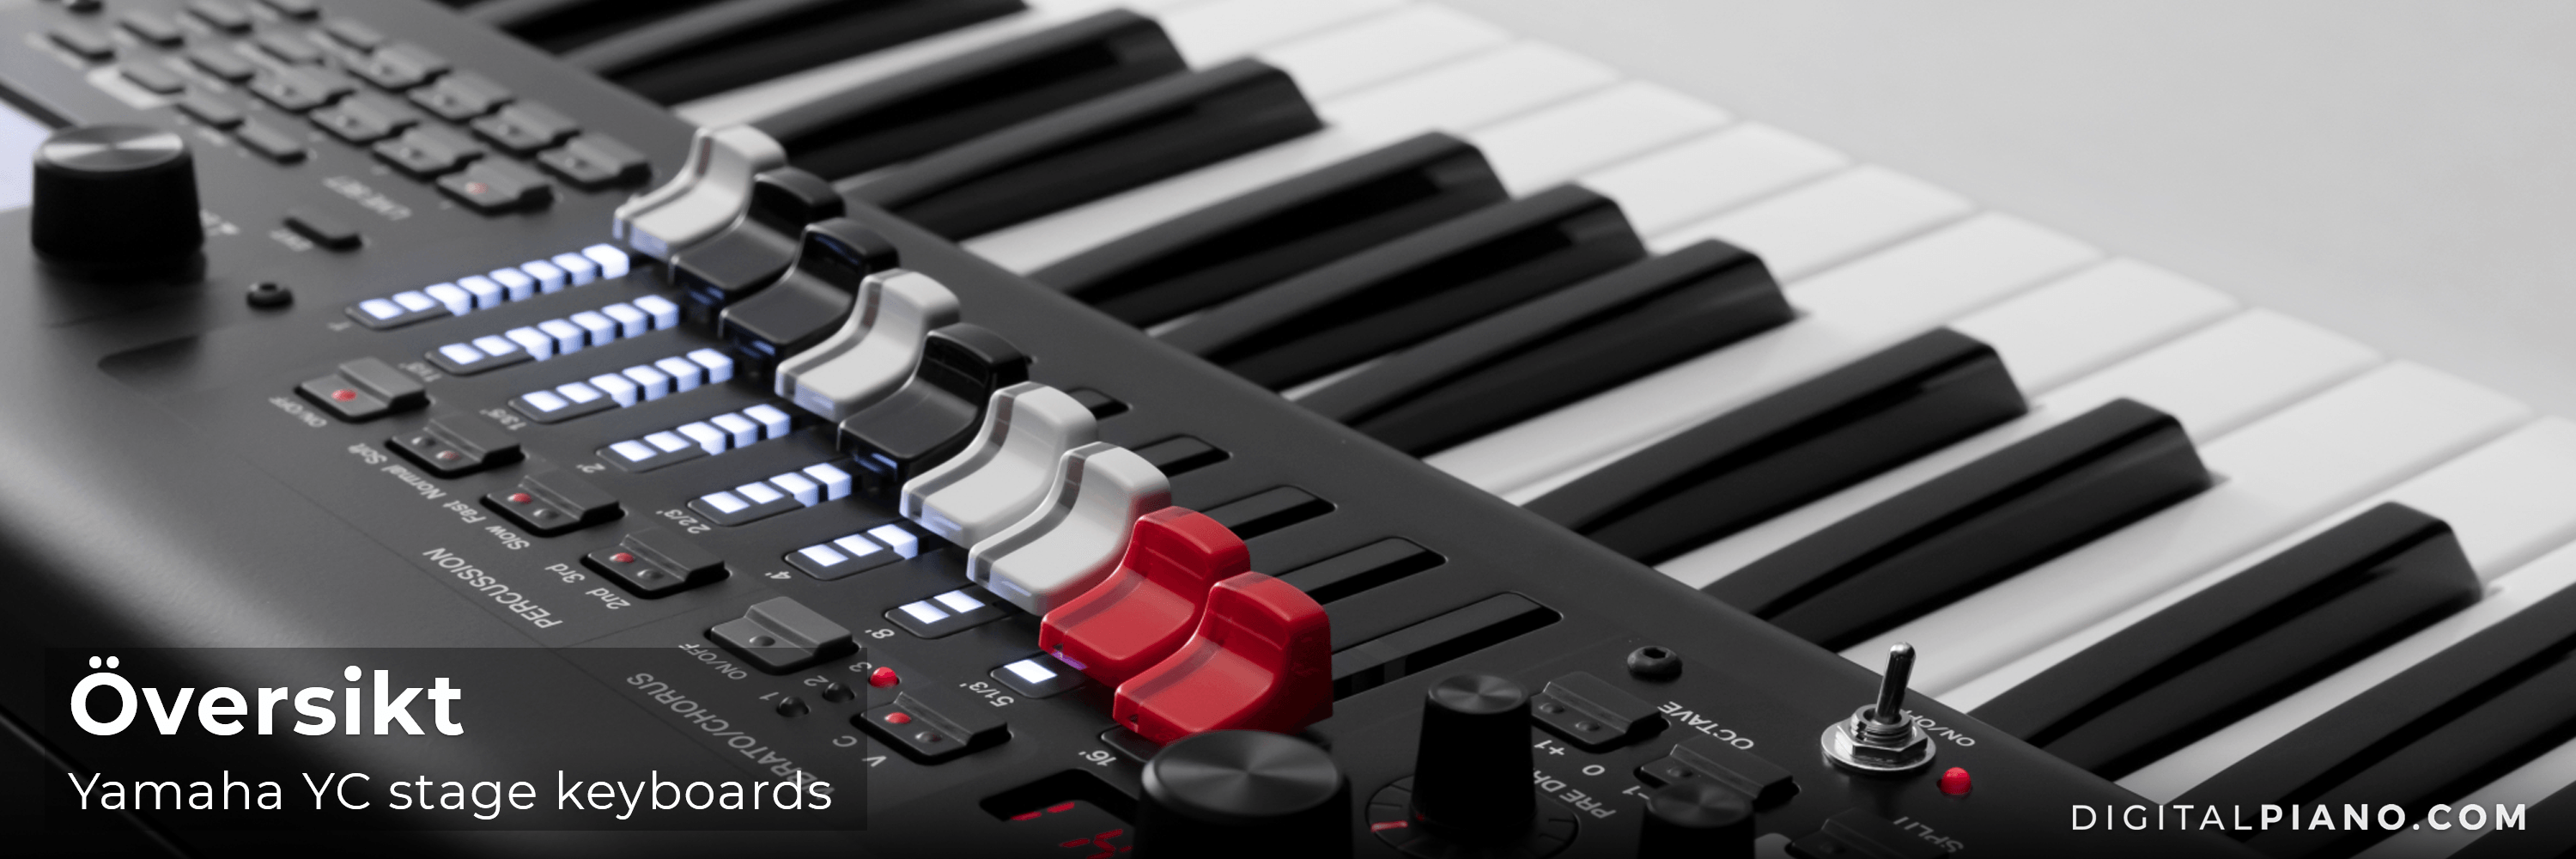 Översikt - Yamaha YC stage keyboards